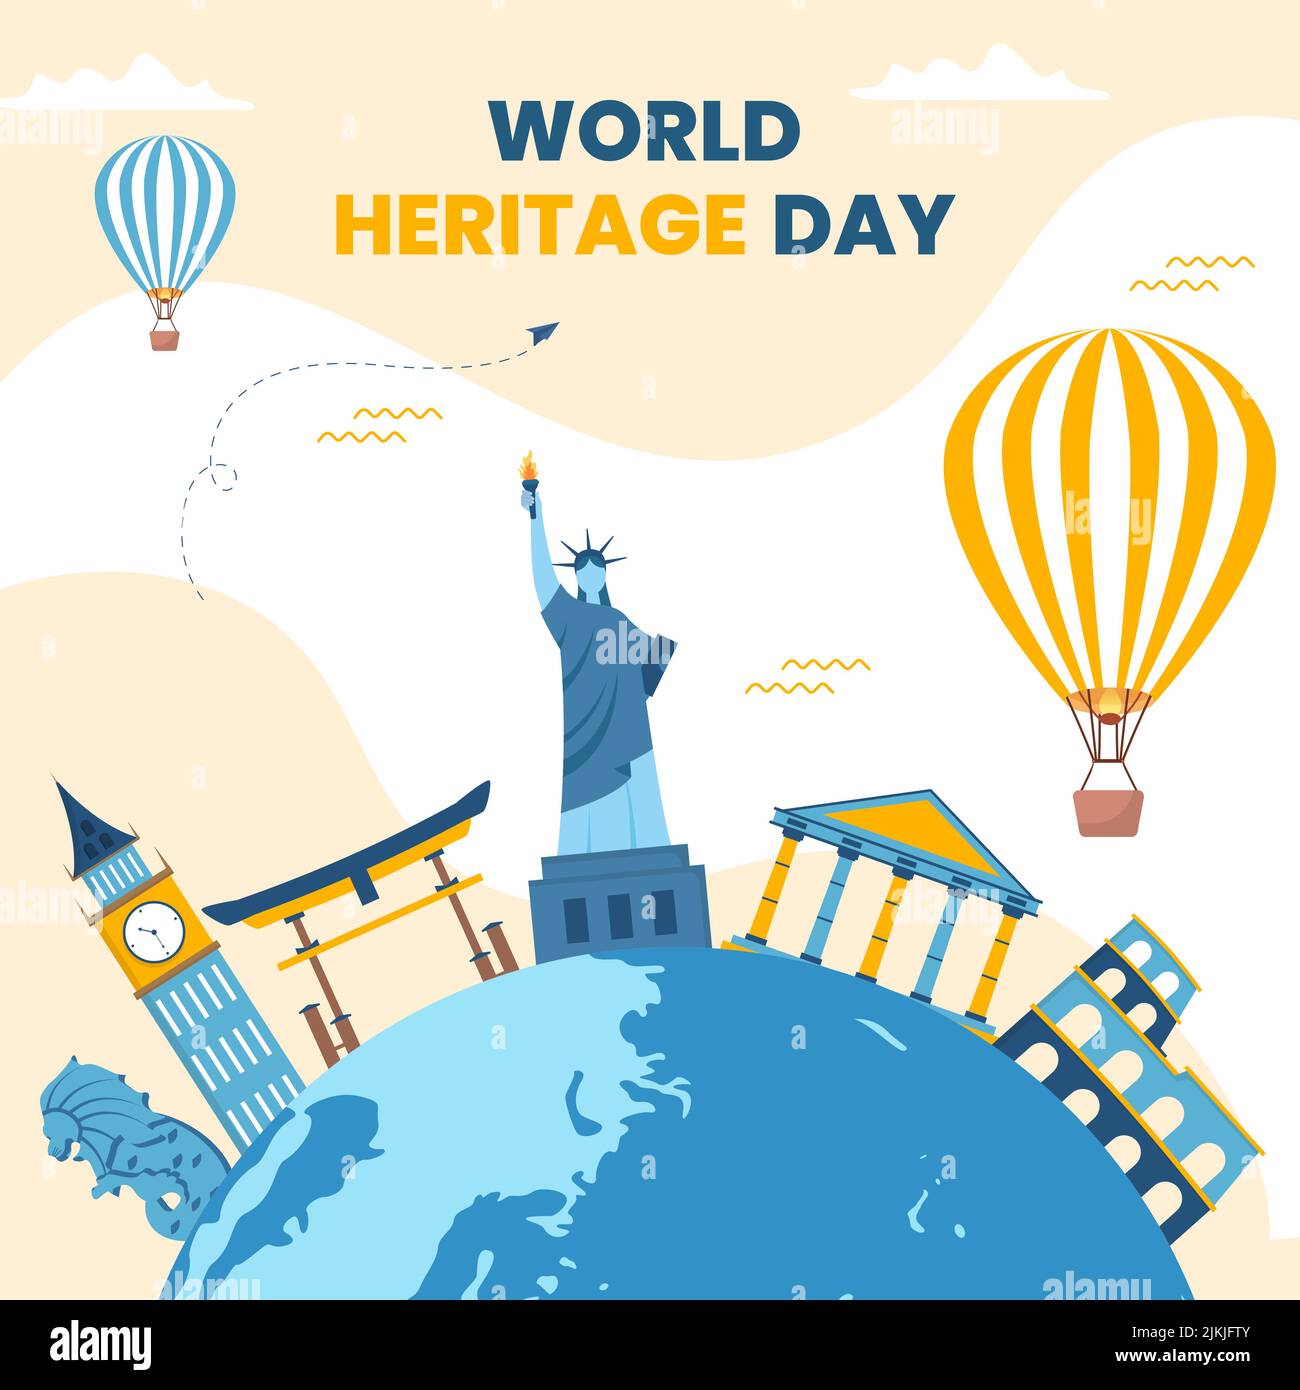 World Heritage Day Template Cartoon background Vector Illustration Illustrazione Vettoriale